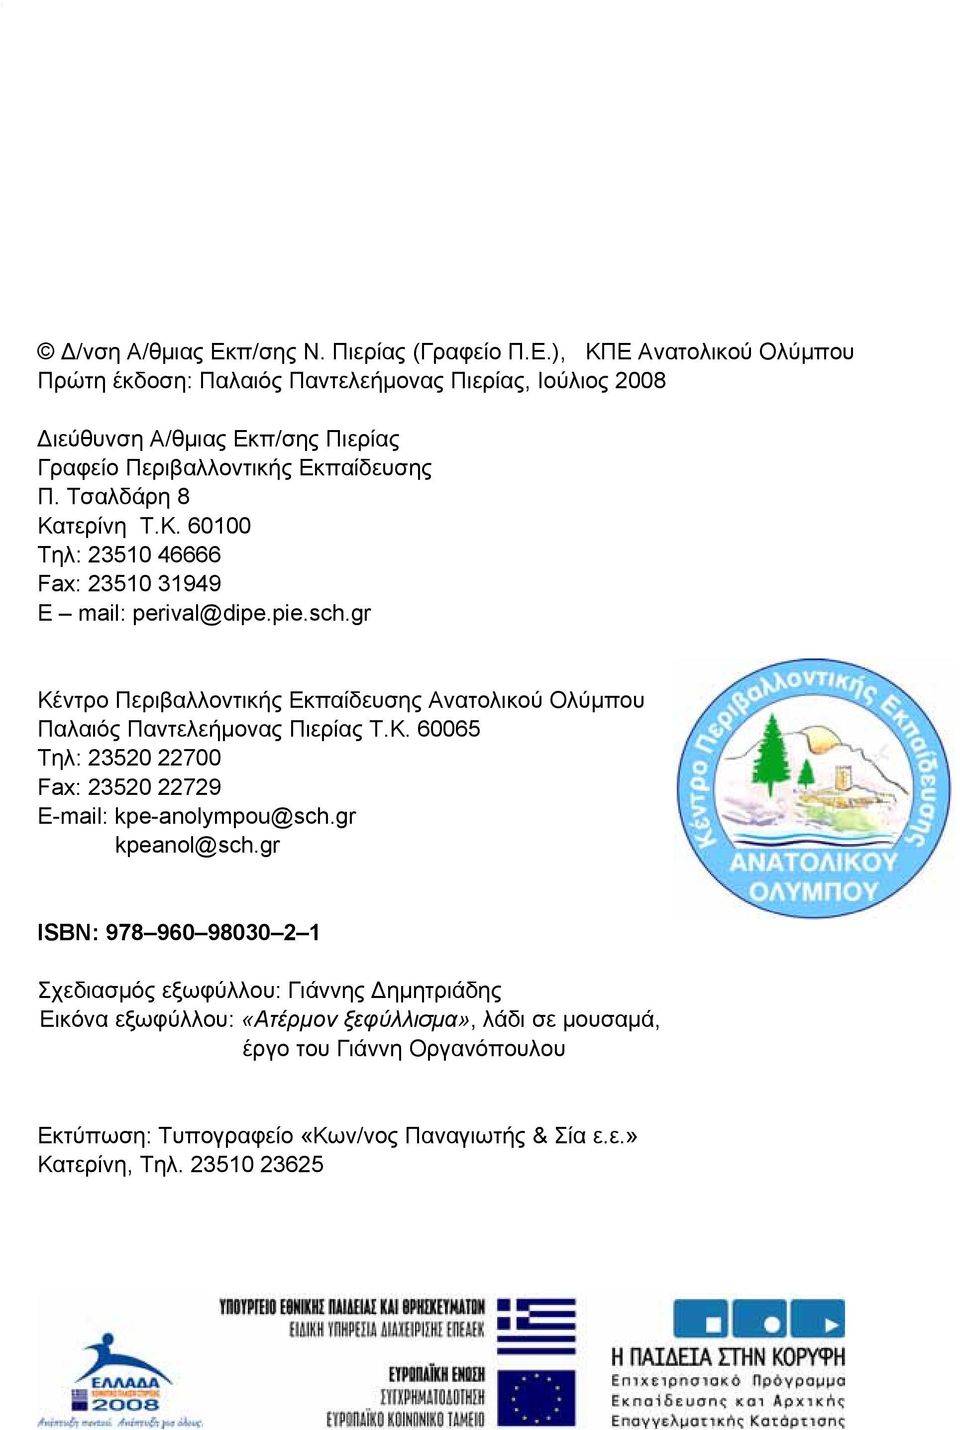 gr Κέντρο Περιβαλλοντικής Εκπαίδευσης Ανατολικού Ολύμπου Παλαιός Παντελεήμονας Πιερίας Τ.Κ. 60065 Τηλ: 23520 22700 Fax: 23520 22729 E-mail: kpe-anolympou@sch.gr kpeanol@sch.